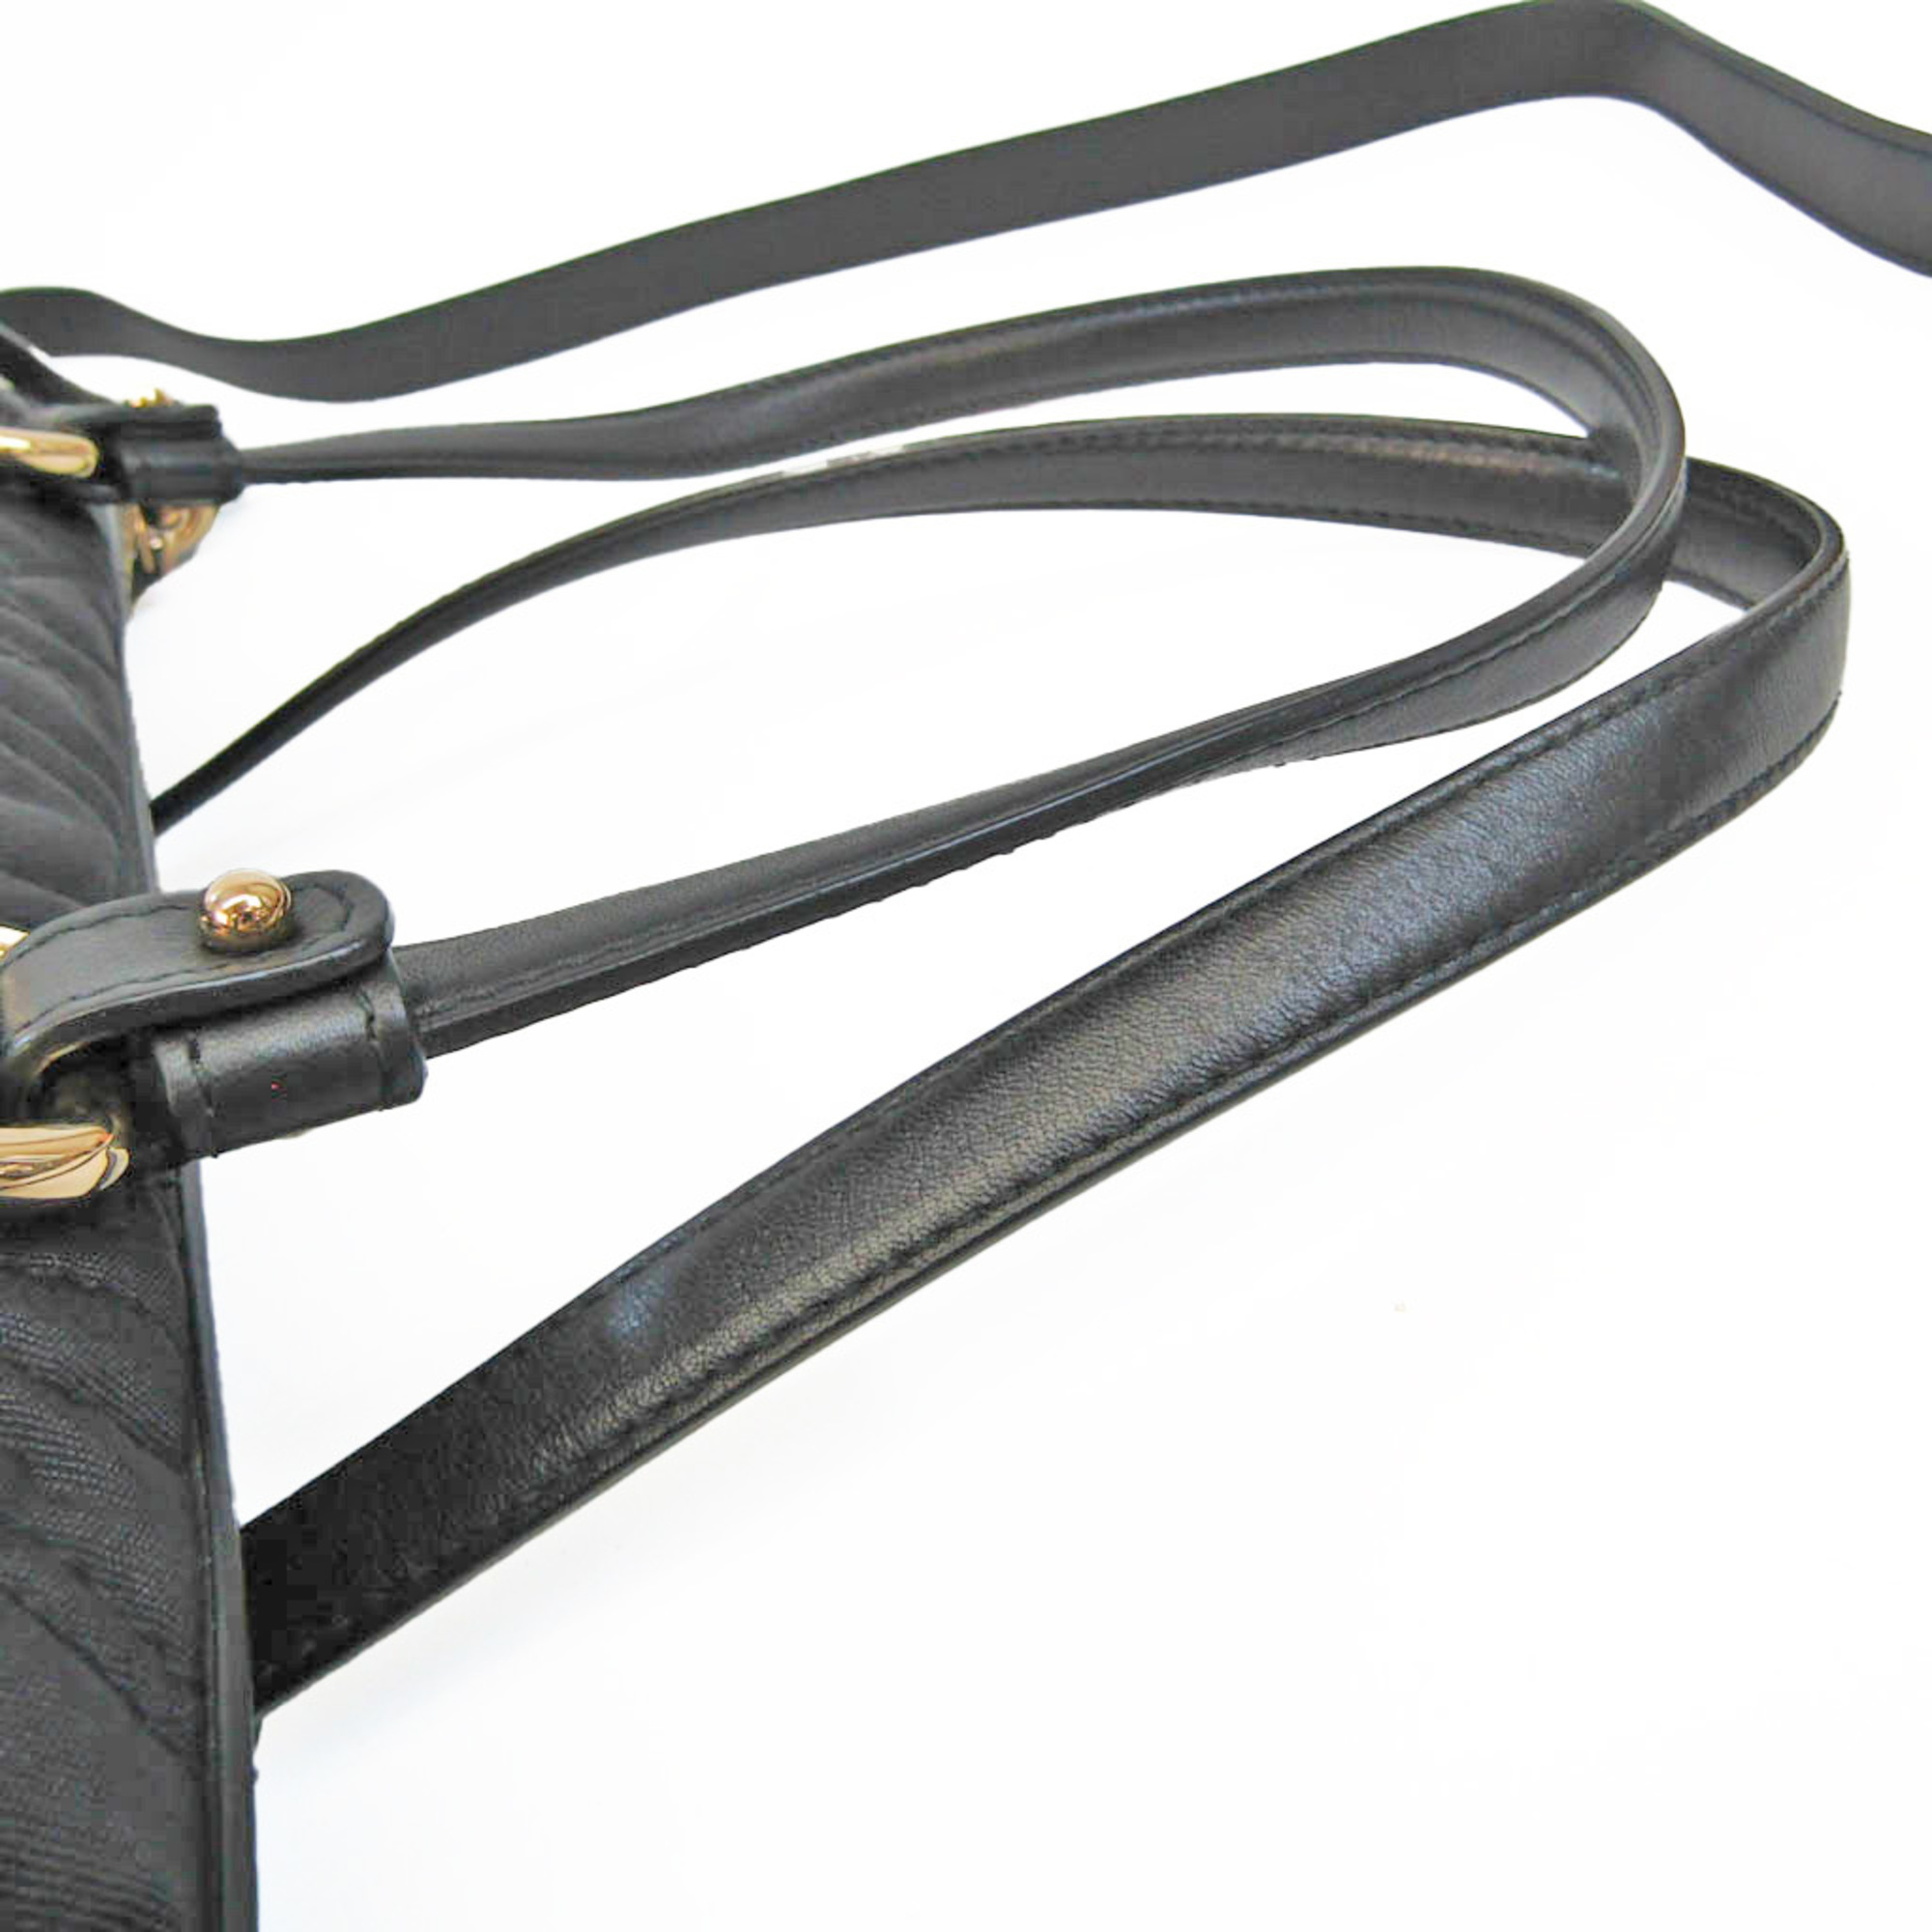 Salvatore Ferragamo FZ 21 G001 Women's Nylon,Leather Handbag,Shoulder Bag Black